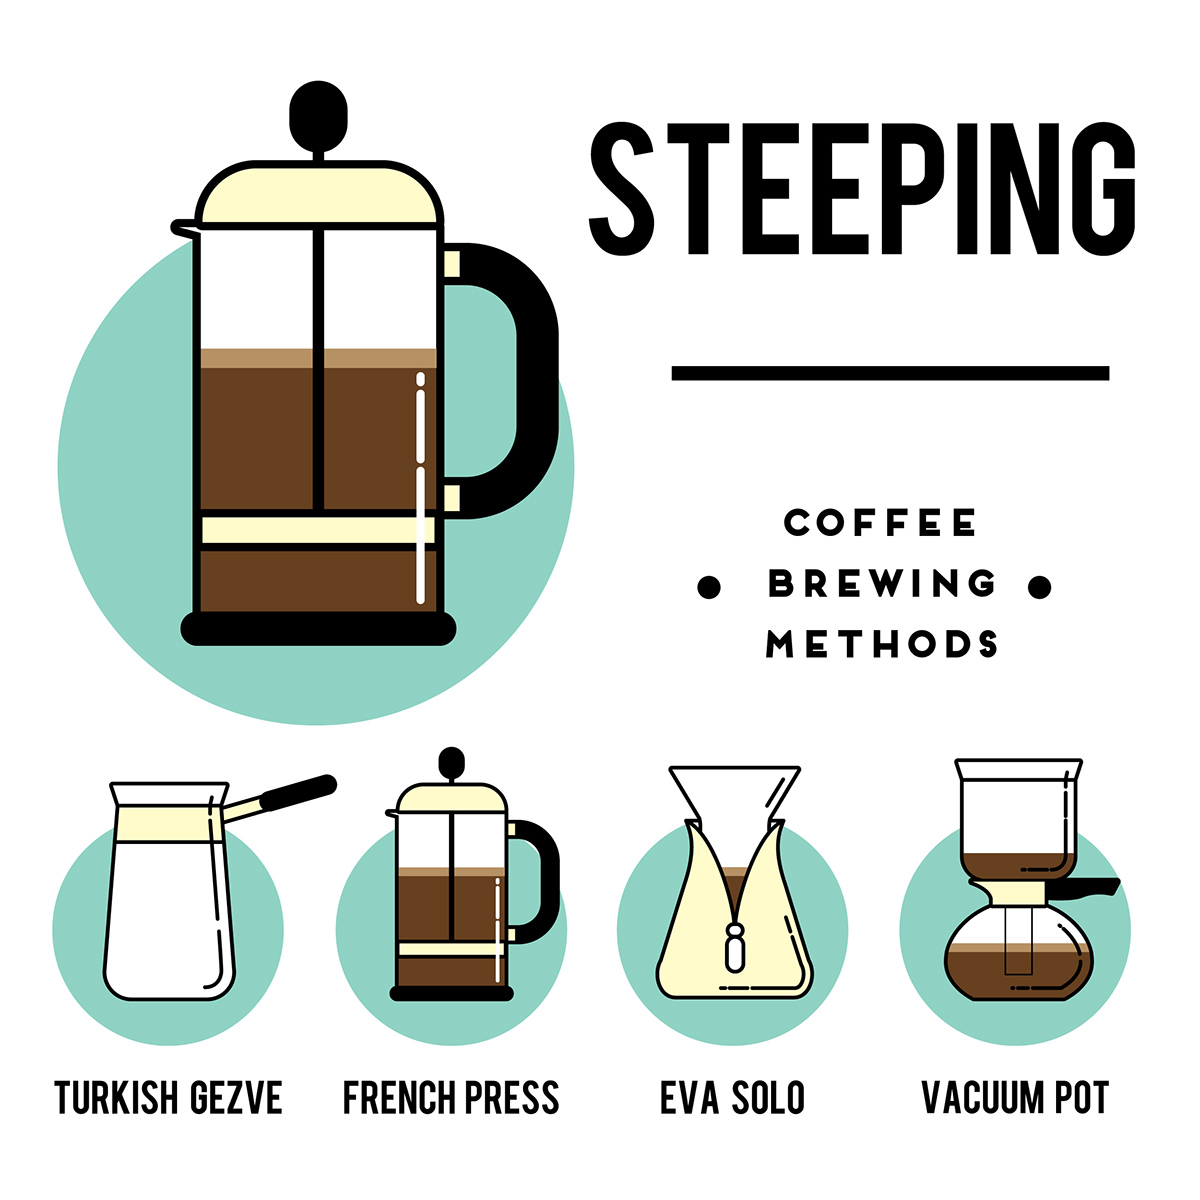 5 Basic Coffee Brewing Methods - The GentleManual